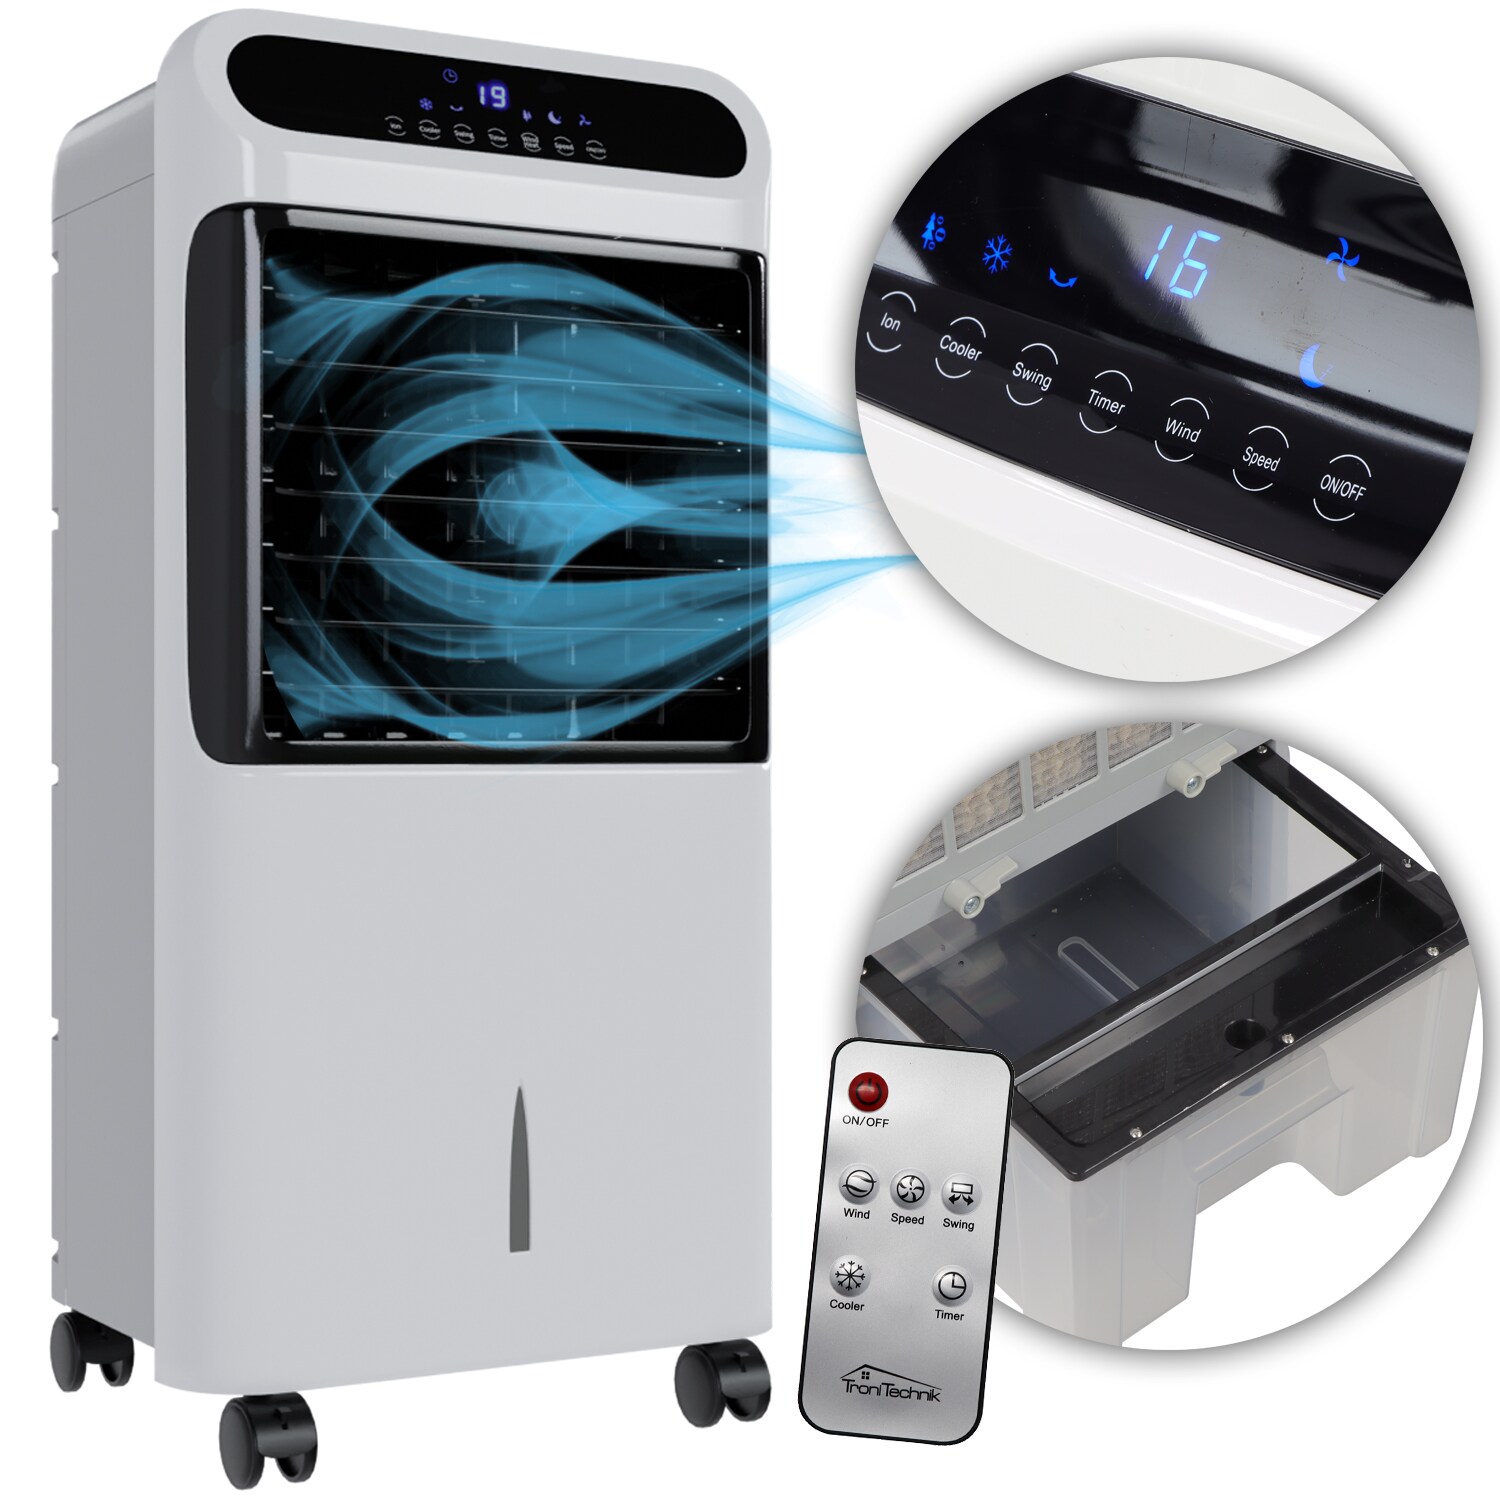 TroniTechnik® Mobiles Klimagerät 5in1 Klimaanlage Luftkühler LK06 5 in 1 Ventilator, inkl. Fernbedienung, Filter, Wasser